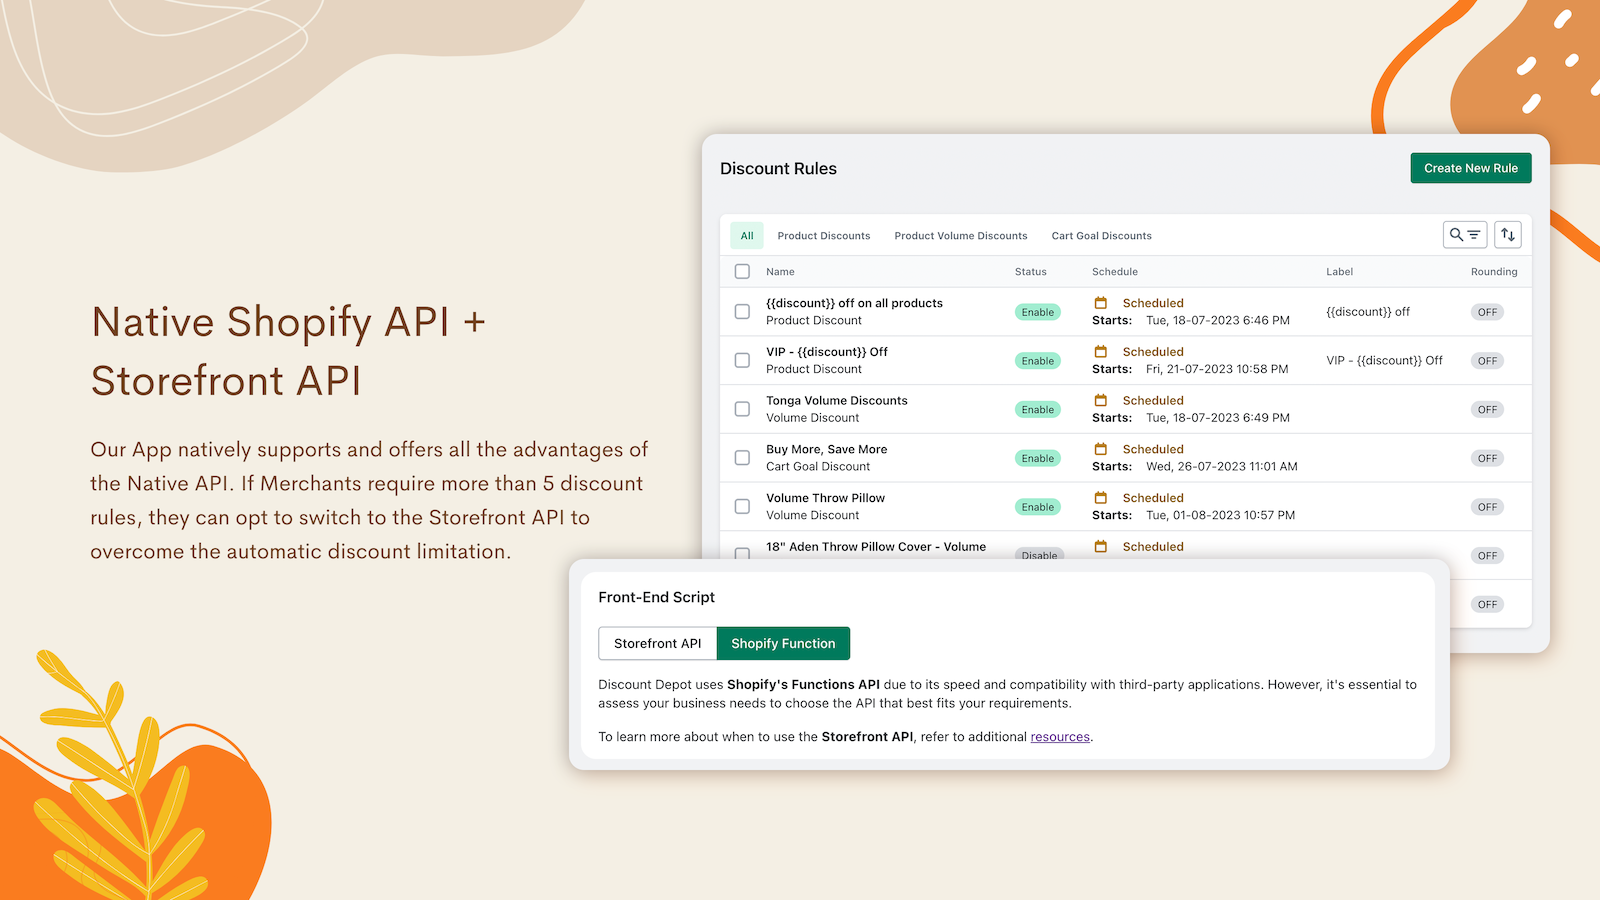 API Shopify native + API Storefront.